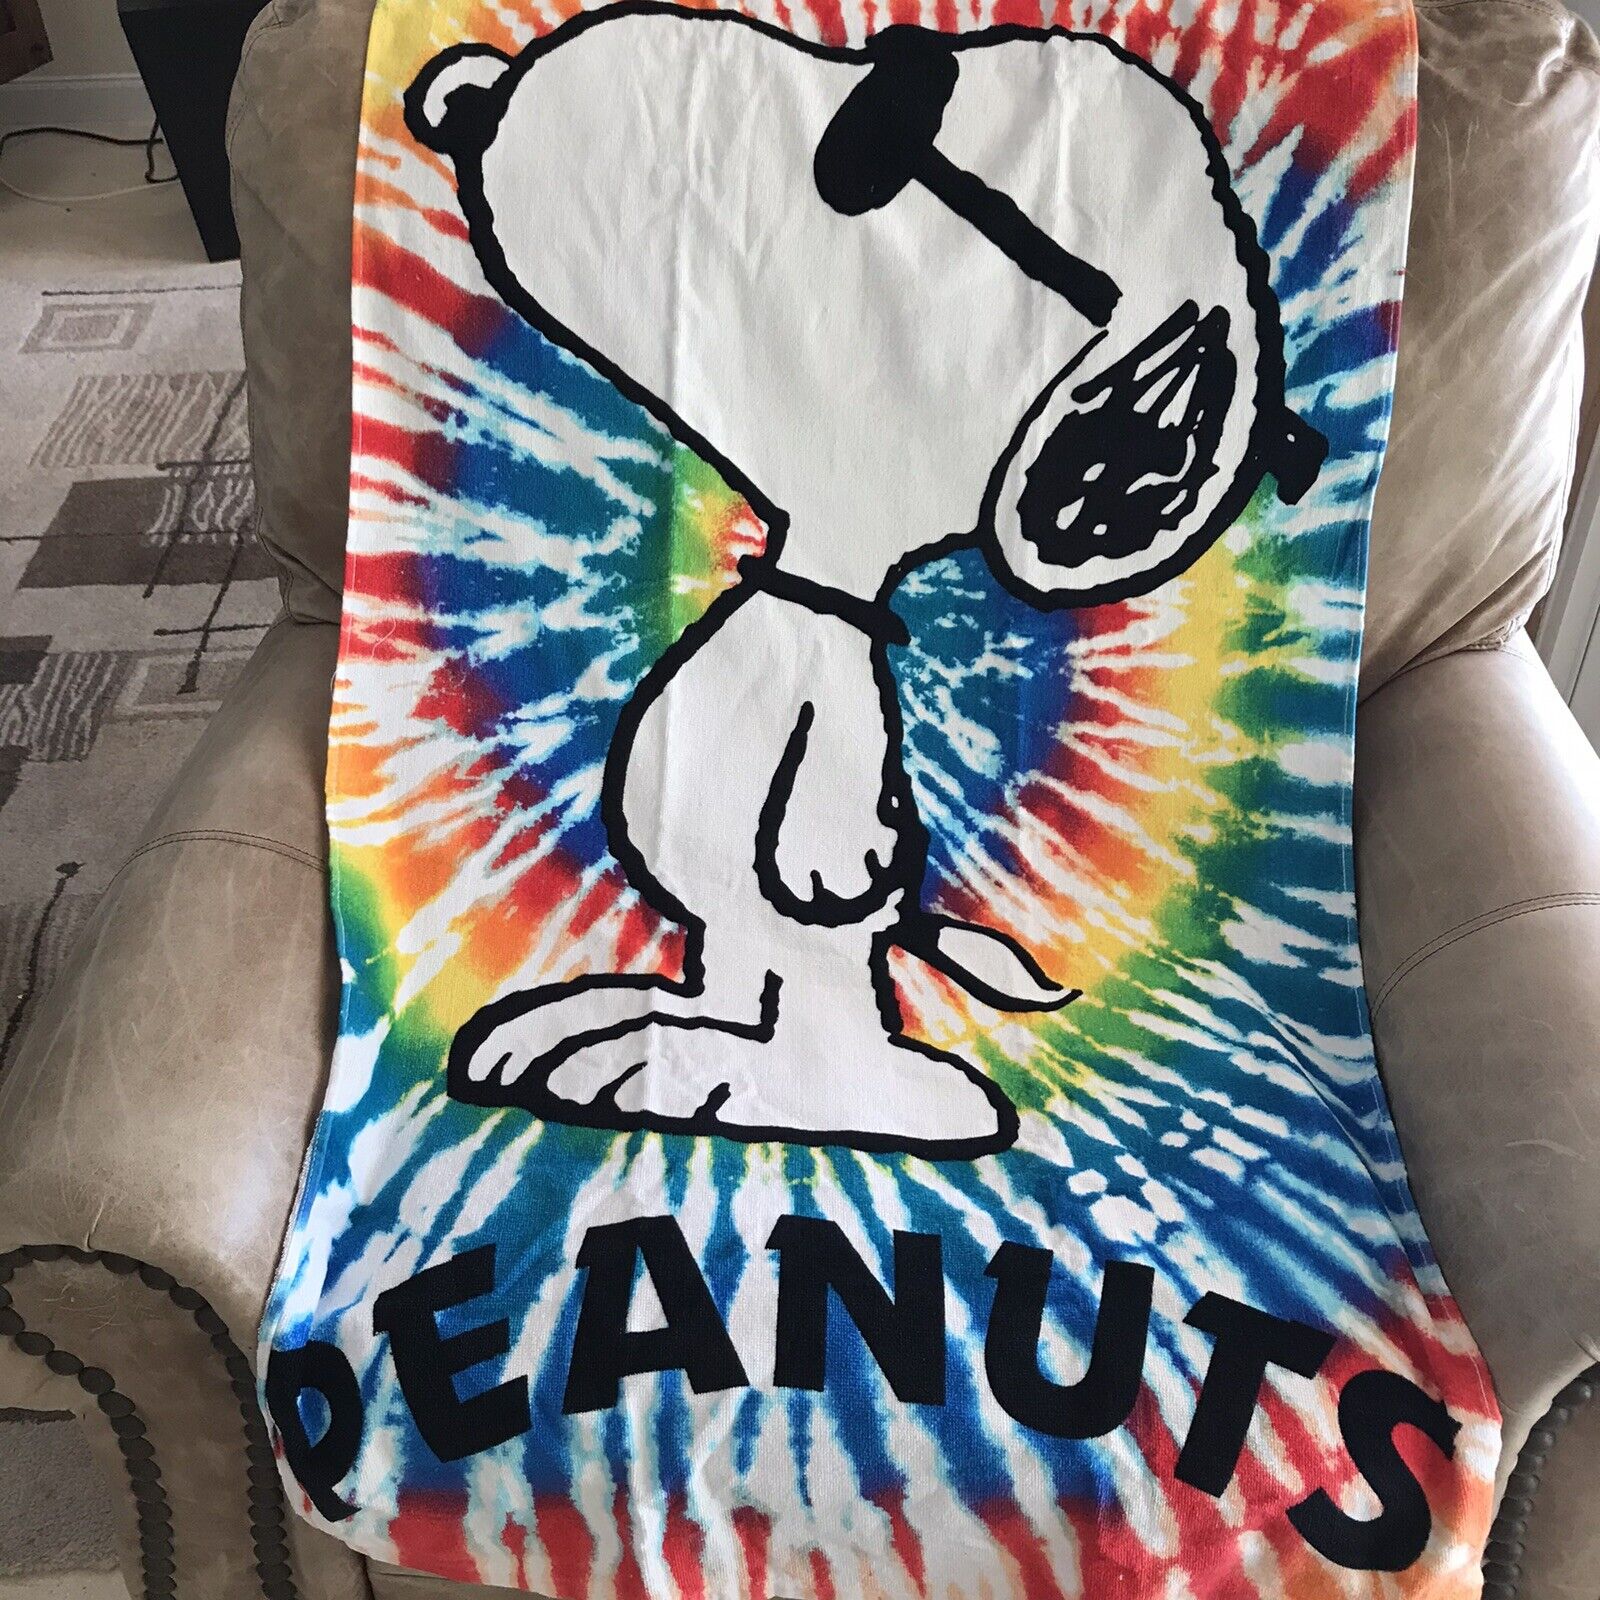 Peanuts Snoopy Joe Cool 28”x58” Beach 🏖 Towel 100% Cotton Jay Franco New W/ Tag